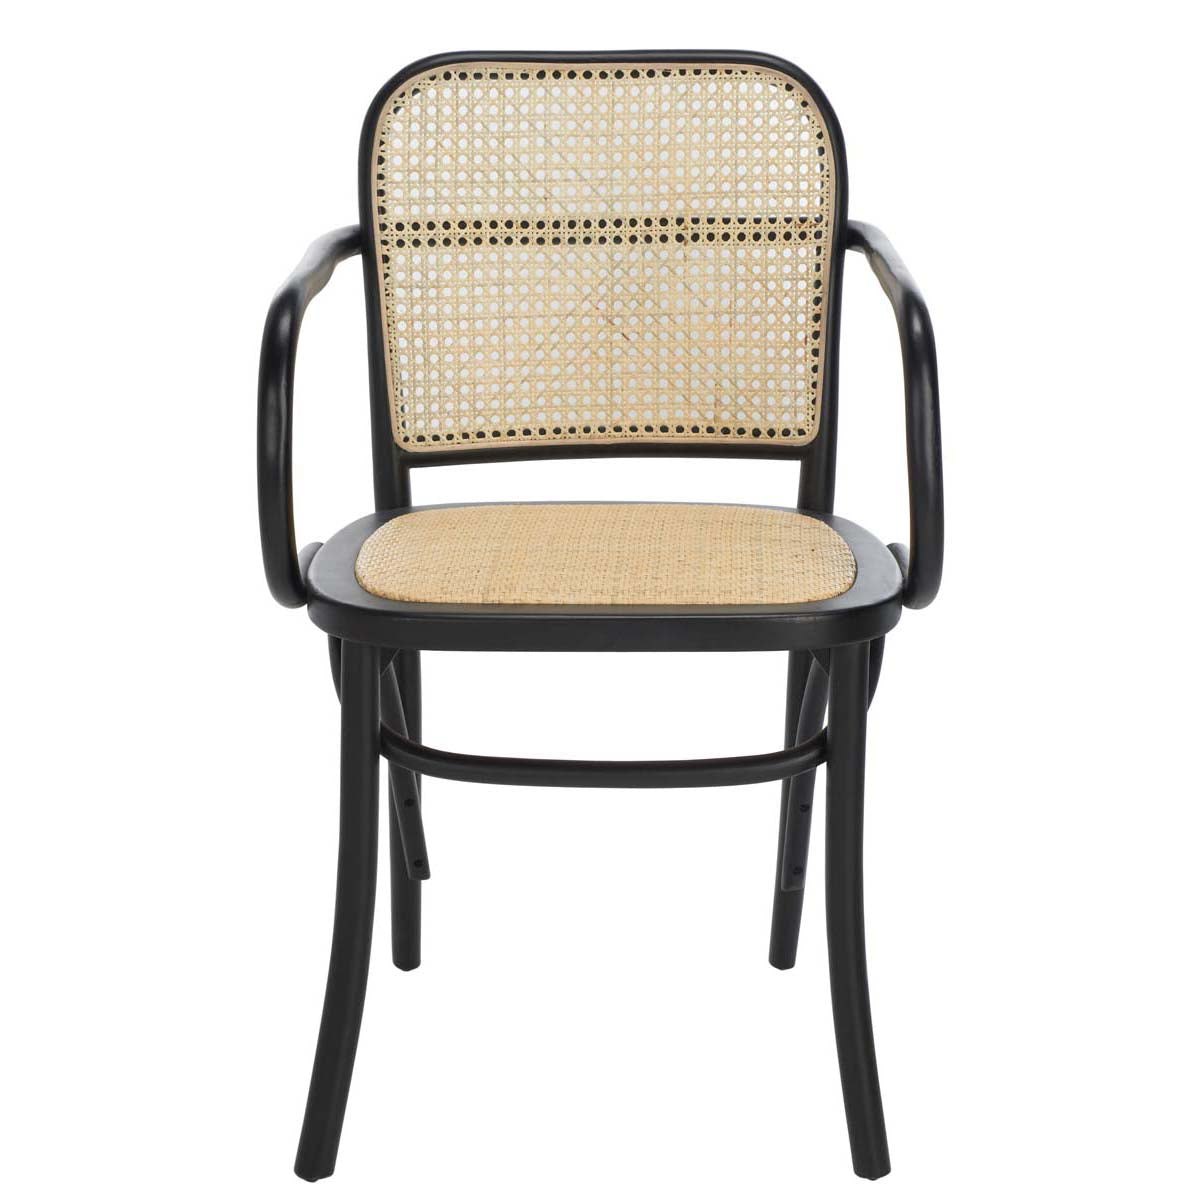 Safavieh Keiko Cane Dining Chair , DCH9503 - Black/Natural